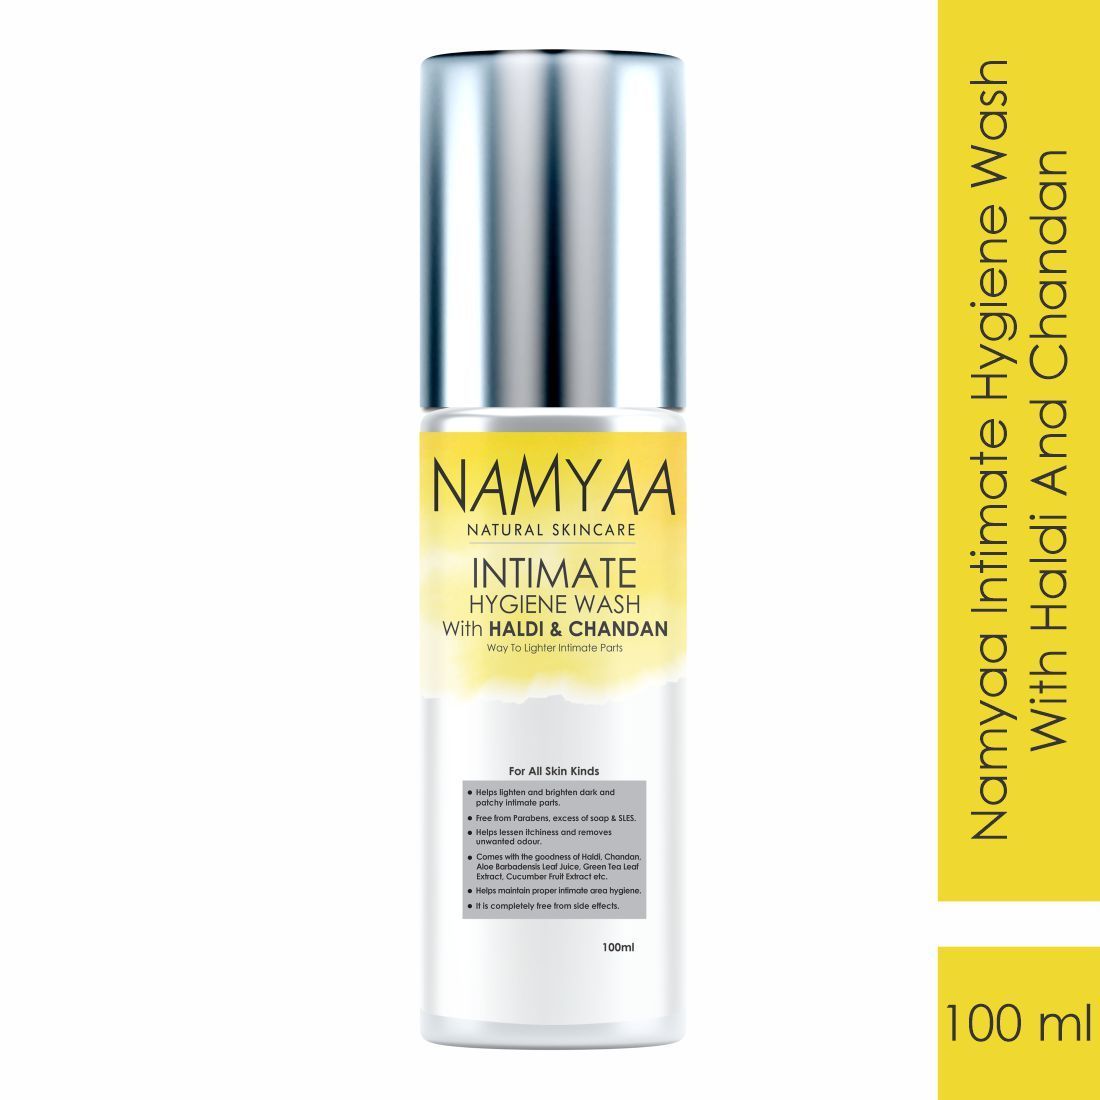 Buy Namyaa Intimate Hygiene Wash with Haldi & Chandan, 100 ml Online